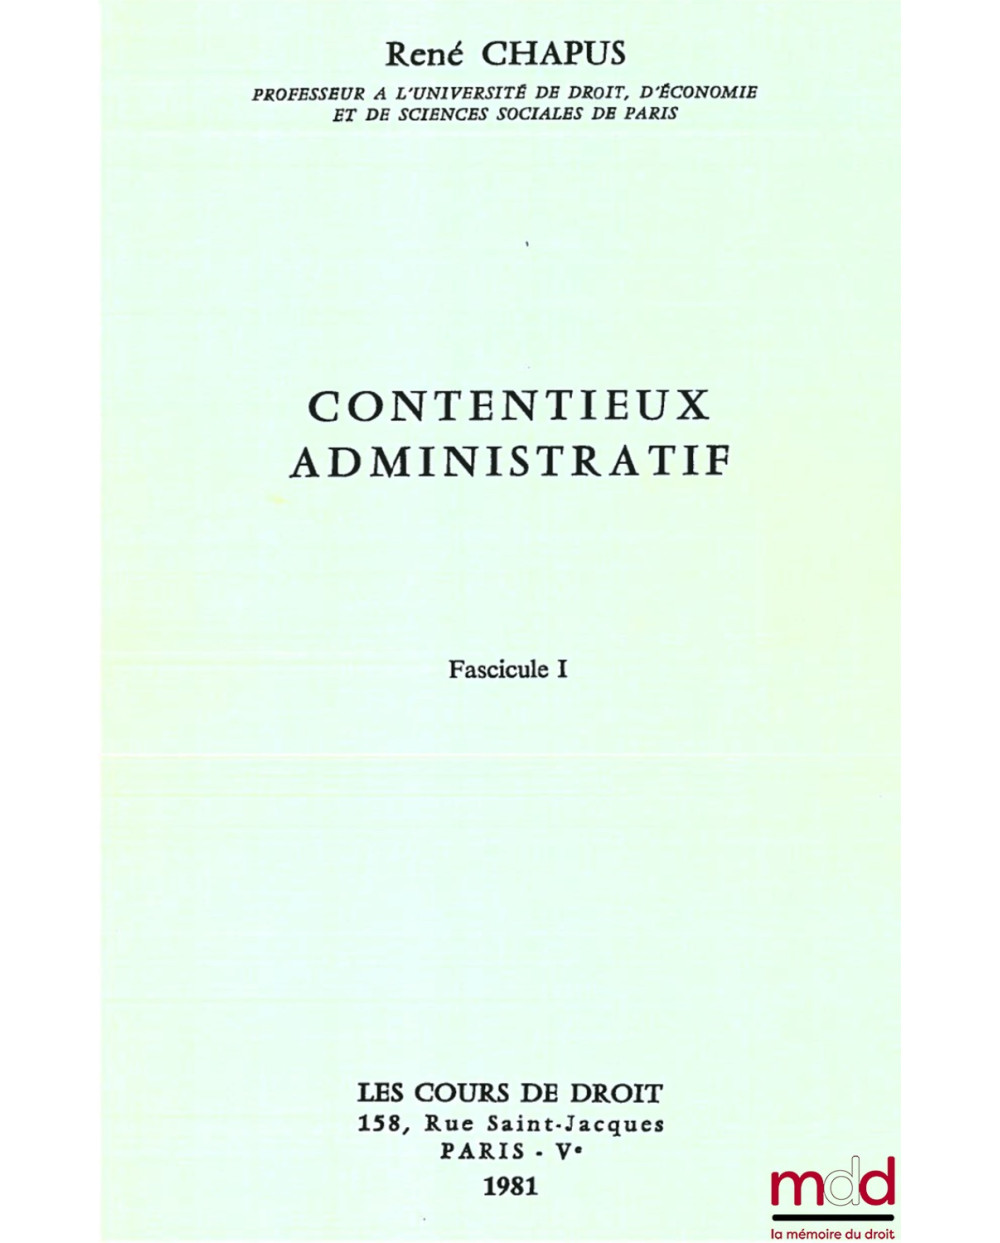 CONTENTIEUX ADMINISTRATIF, Fascicule I et II